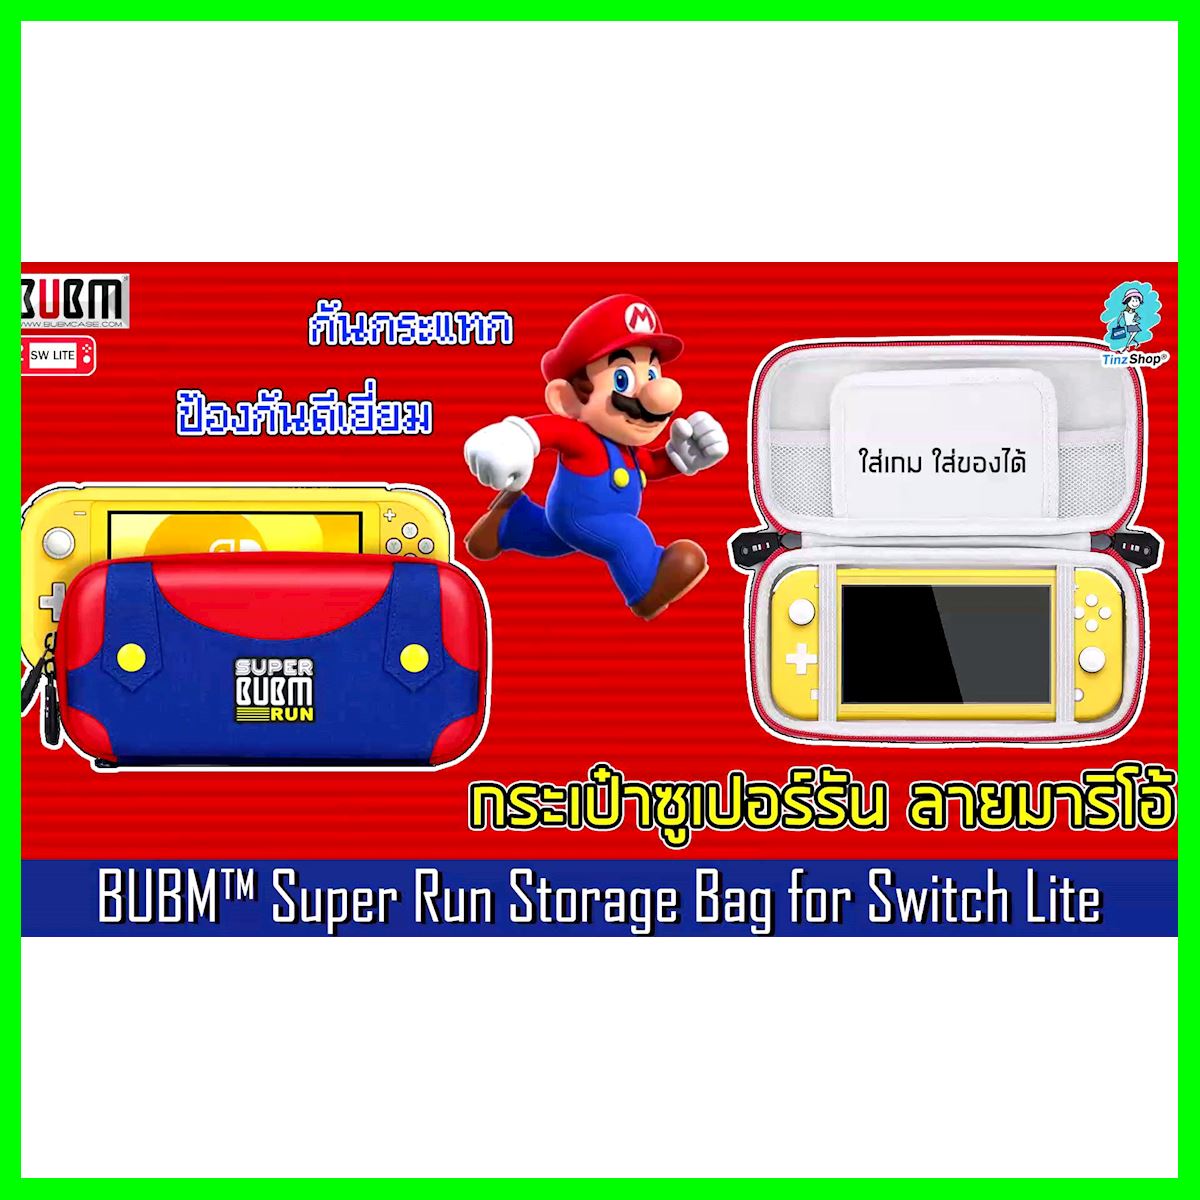 BUBM™ Super Run Storage Bag for Switch Lite กระเป๋าซูเปอร์รันลายมาริโอ ตั้งเครื่องได้ สำหรับสวิทช์ไลท์ ใครยังไม่ลอง ถือว่าพลาดมาก !!